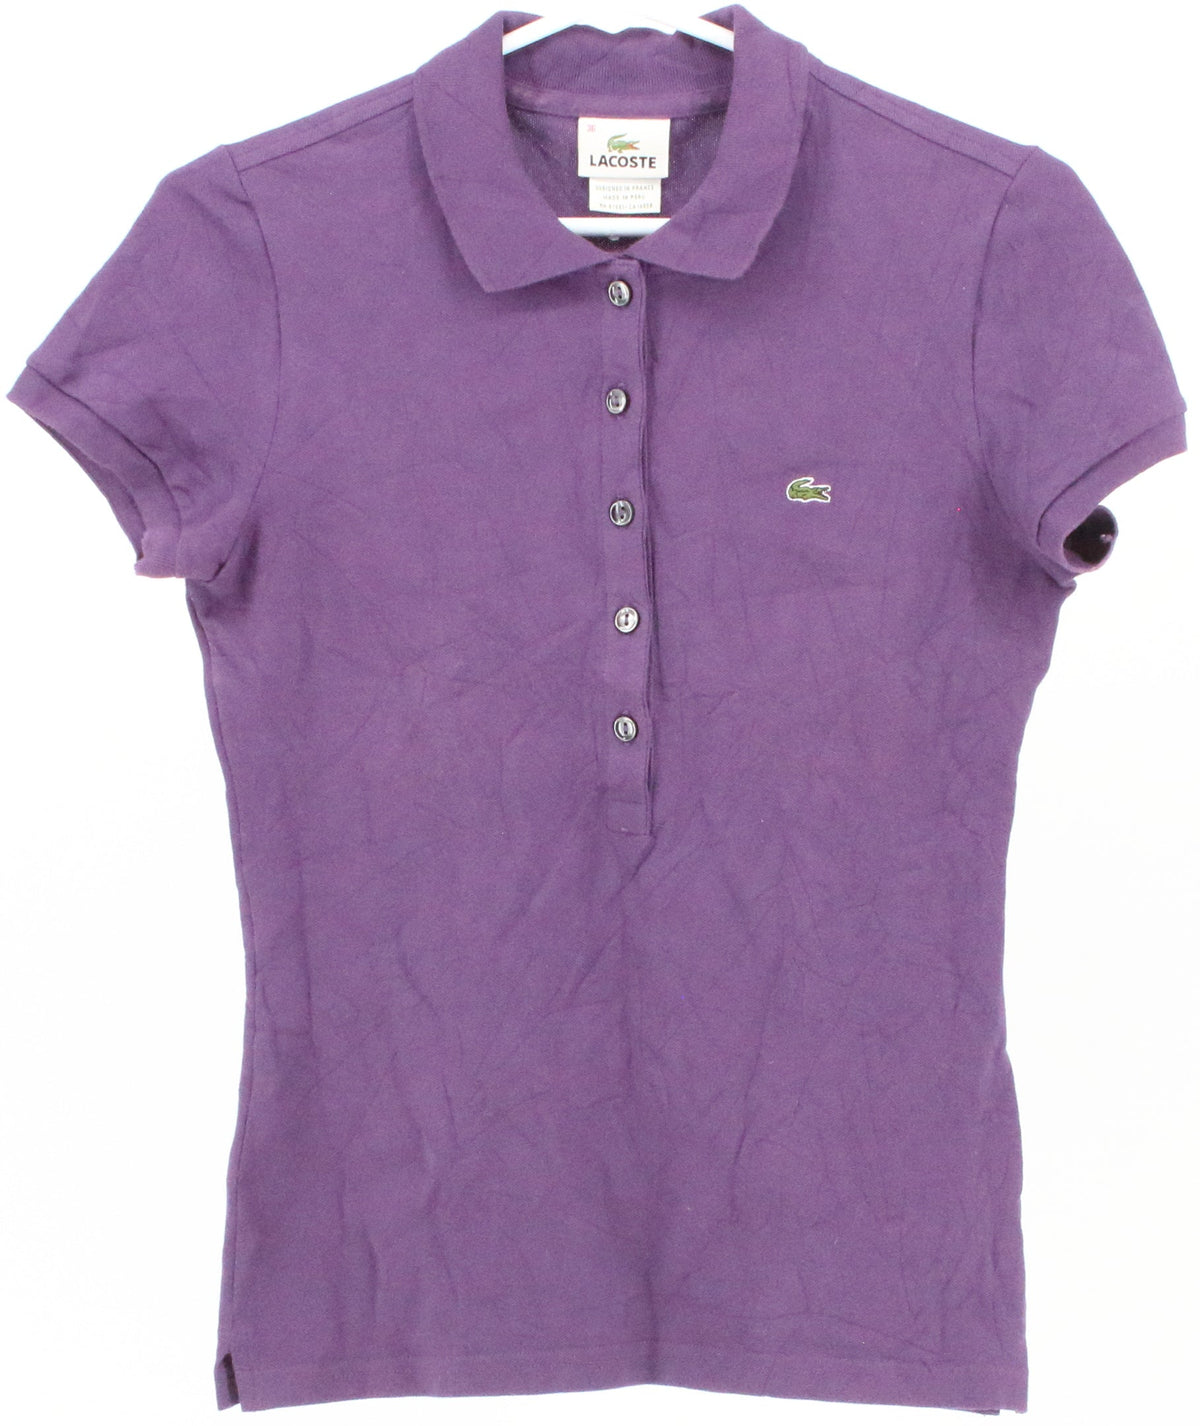 Lacoste Purple Women's Polo Shirt